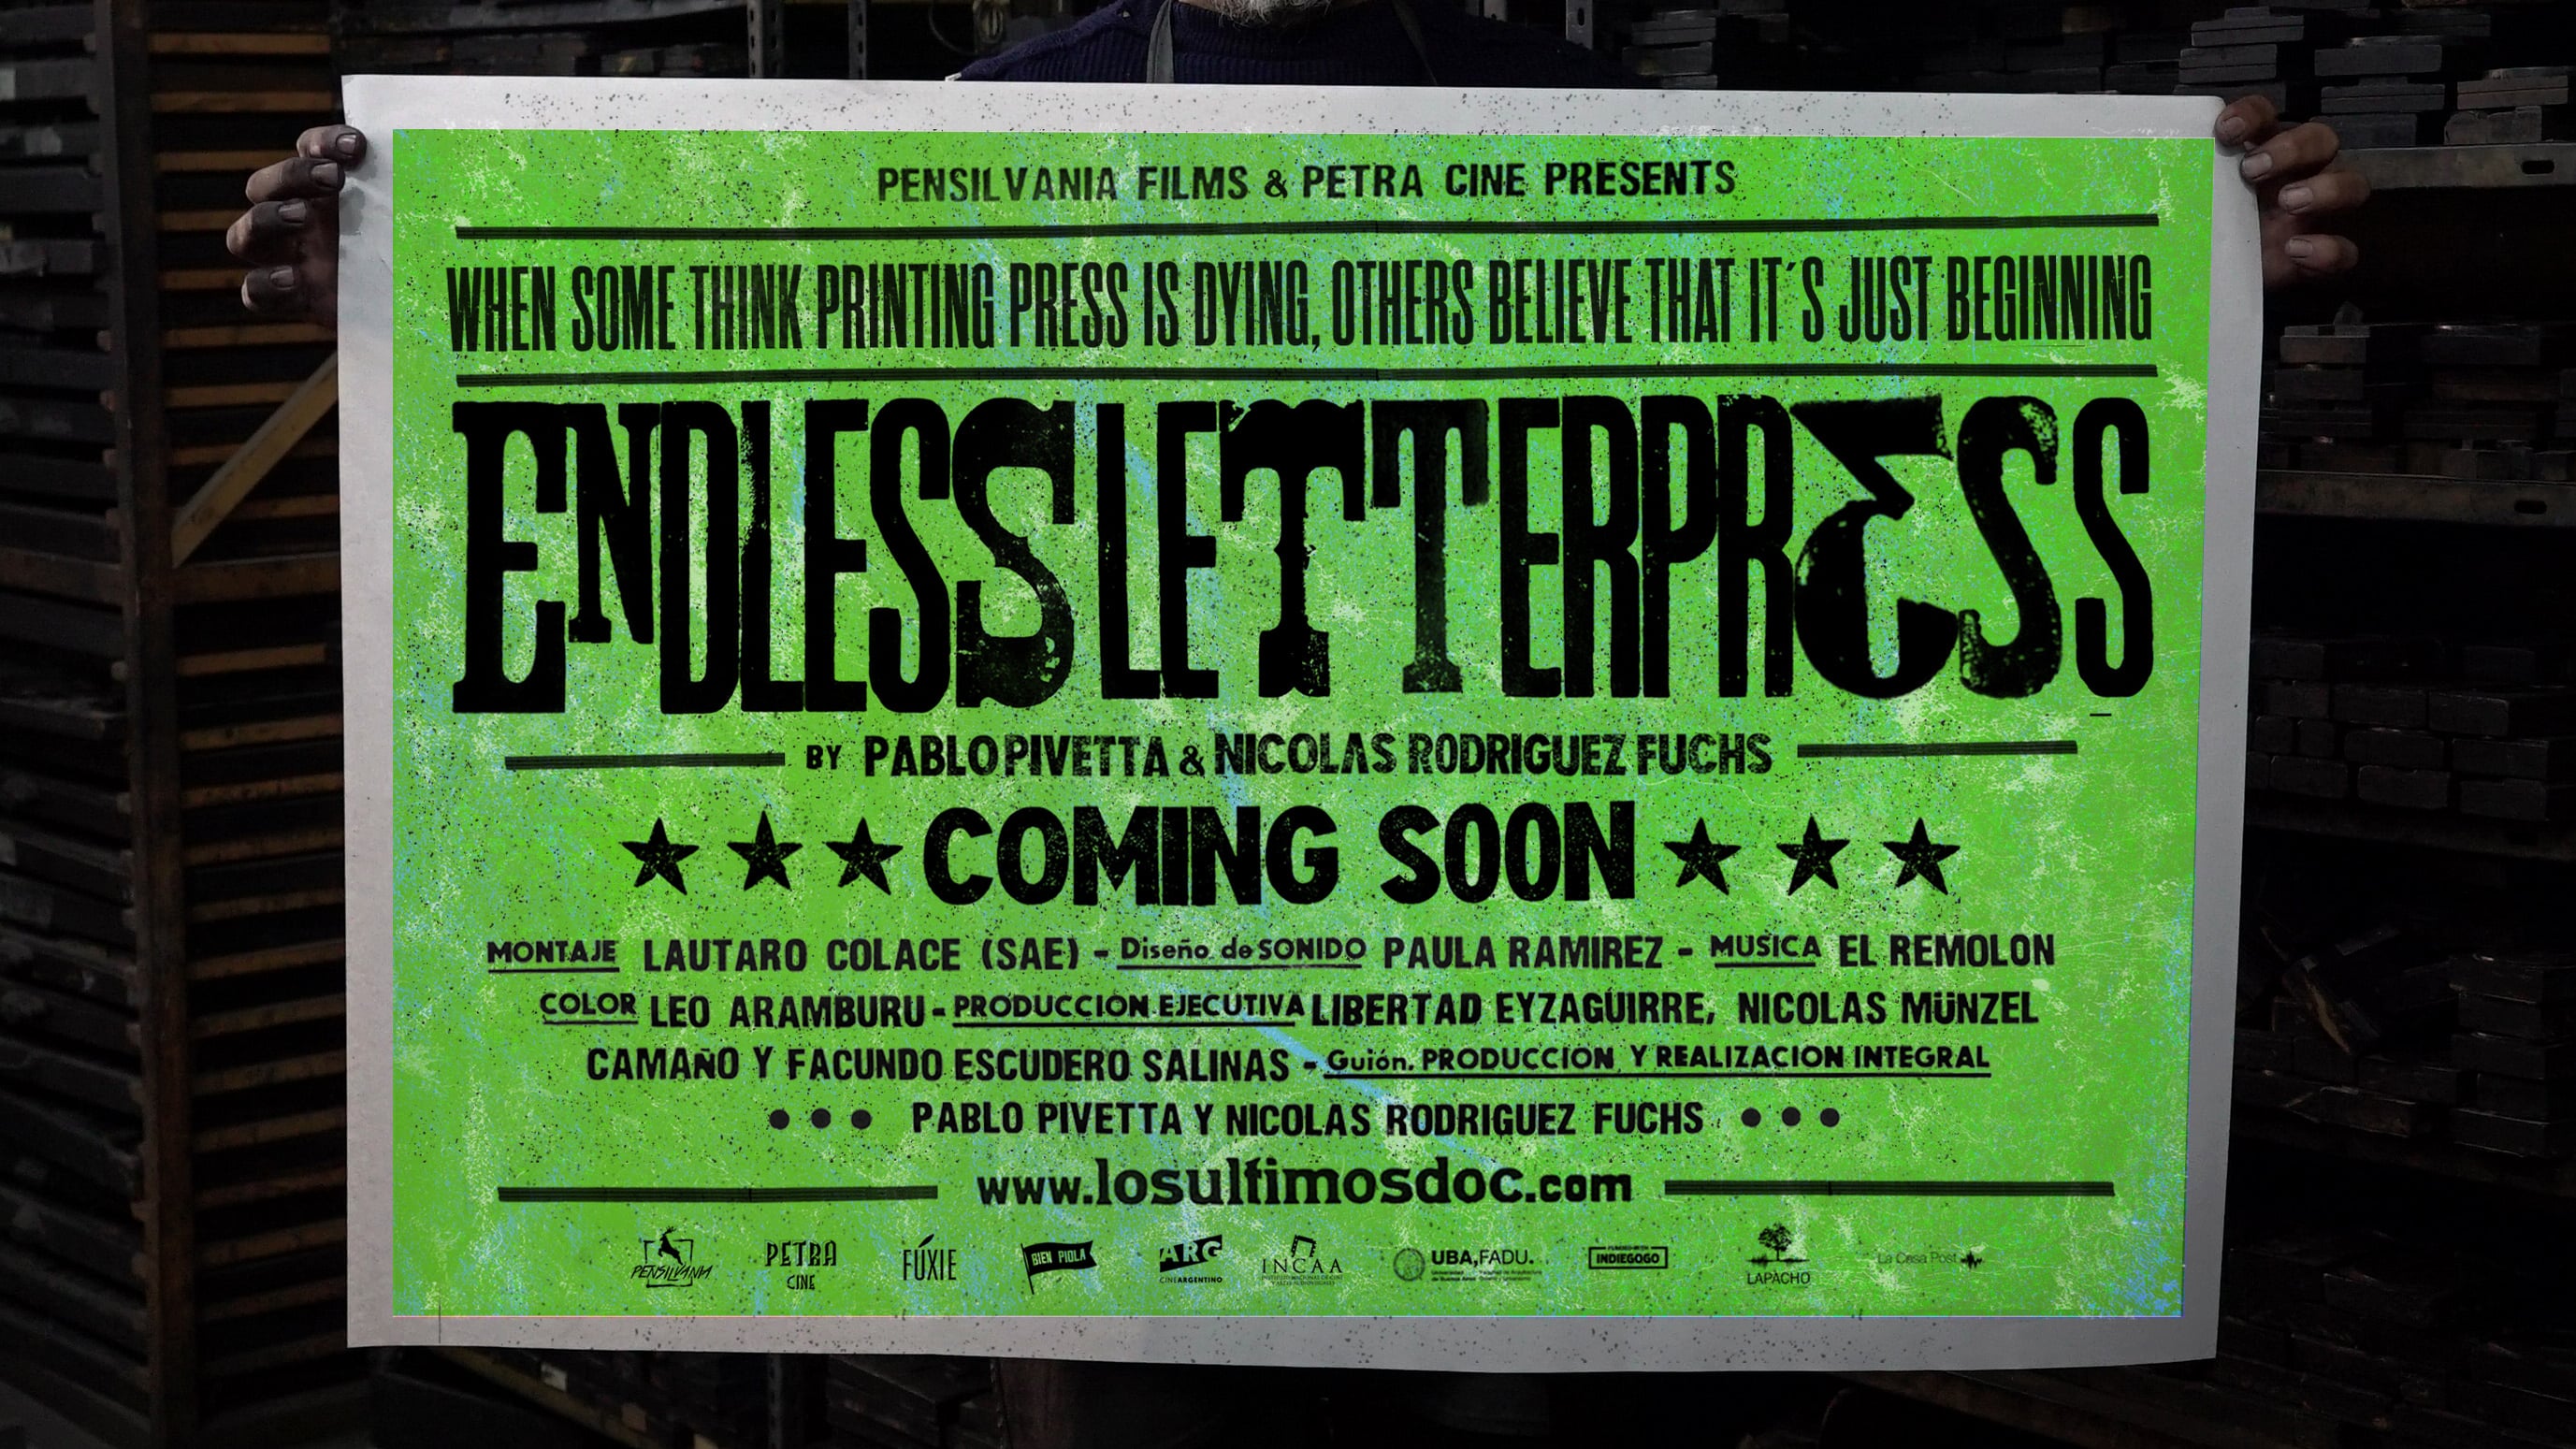 Los Ultimos / Endless Letterpress - Trailer 2019